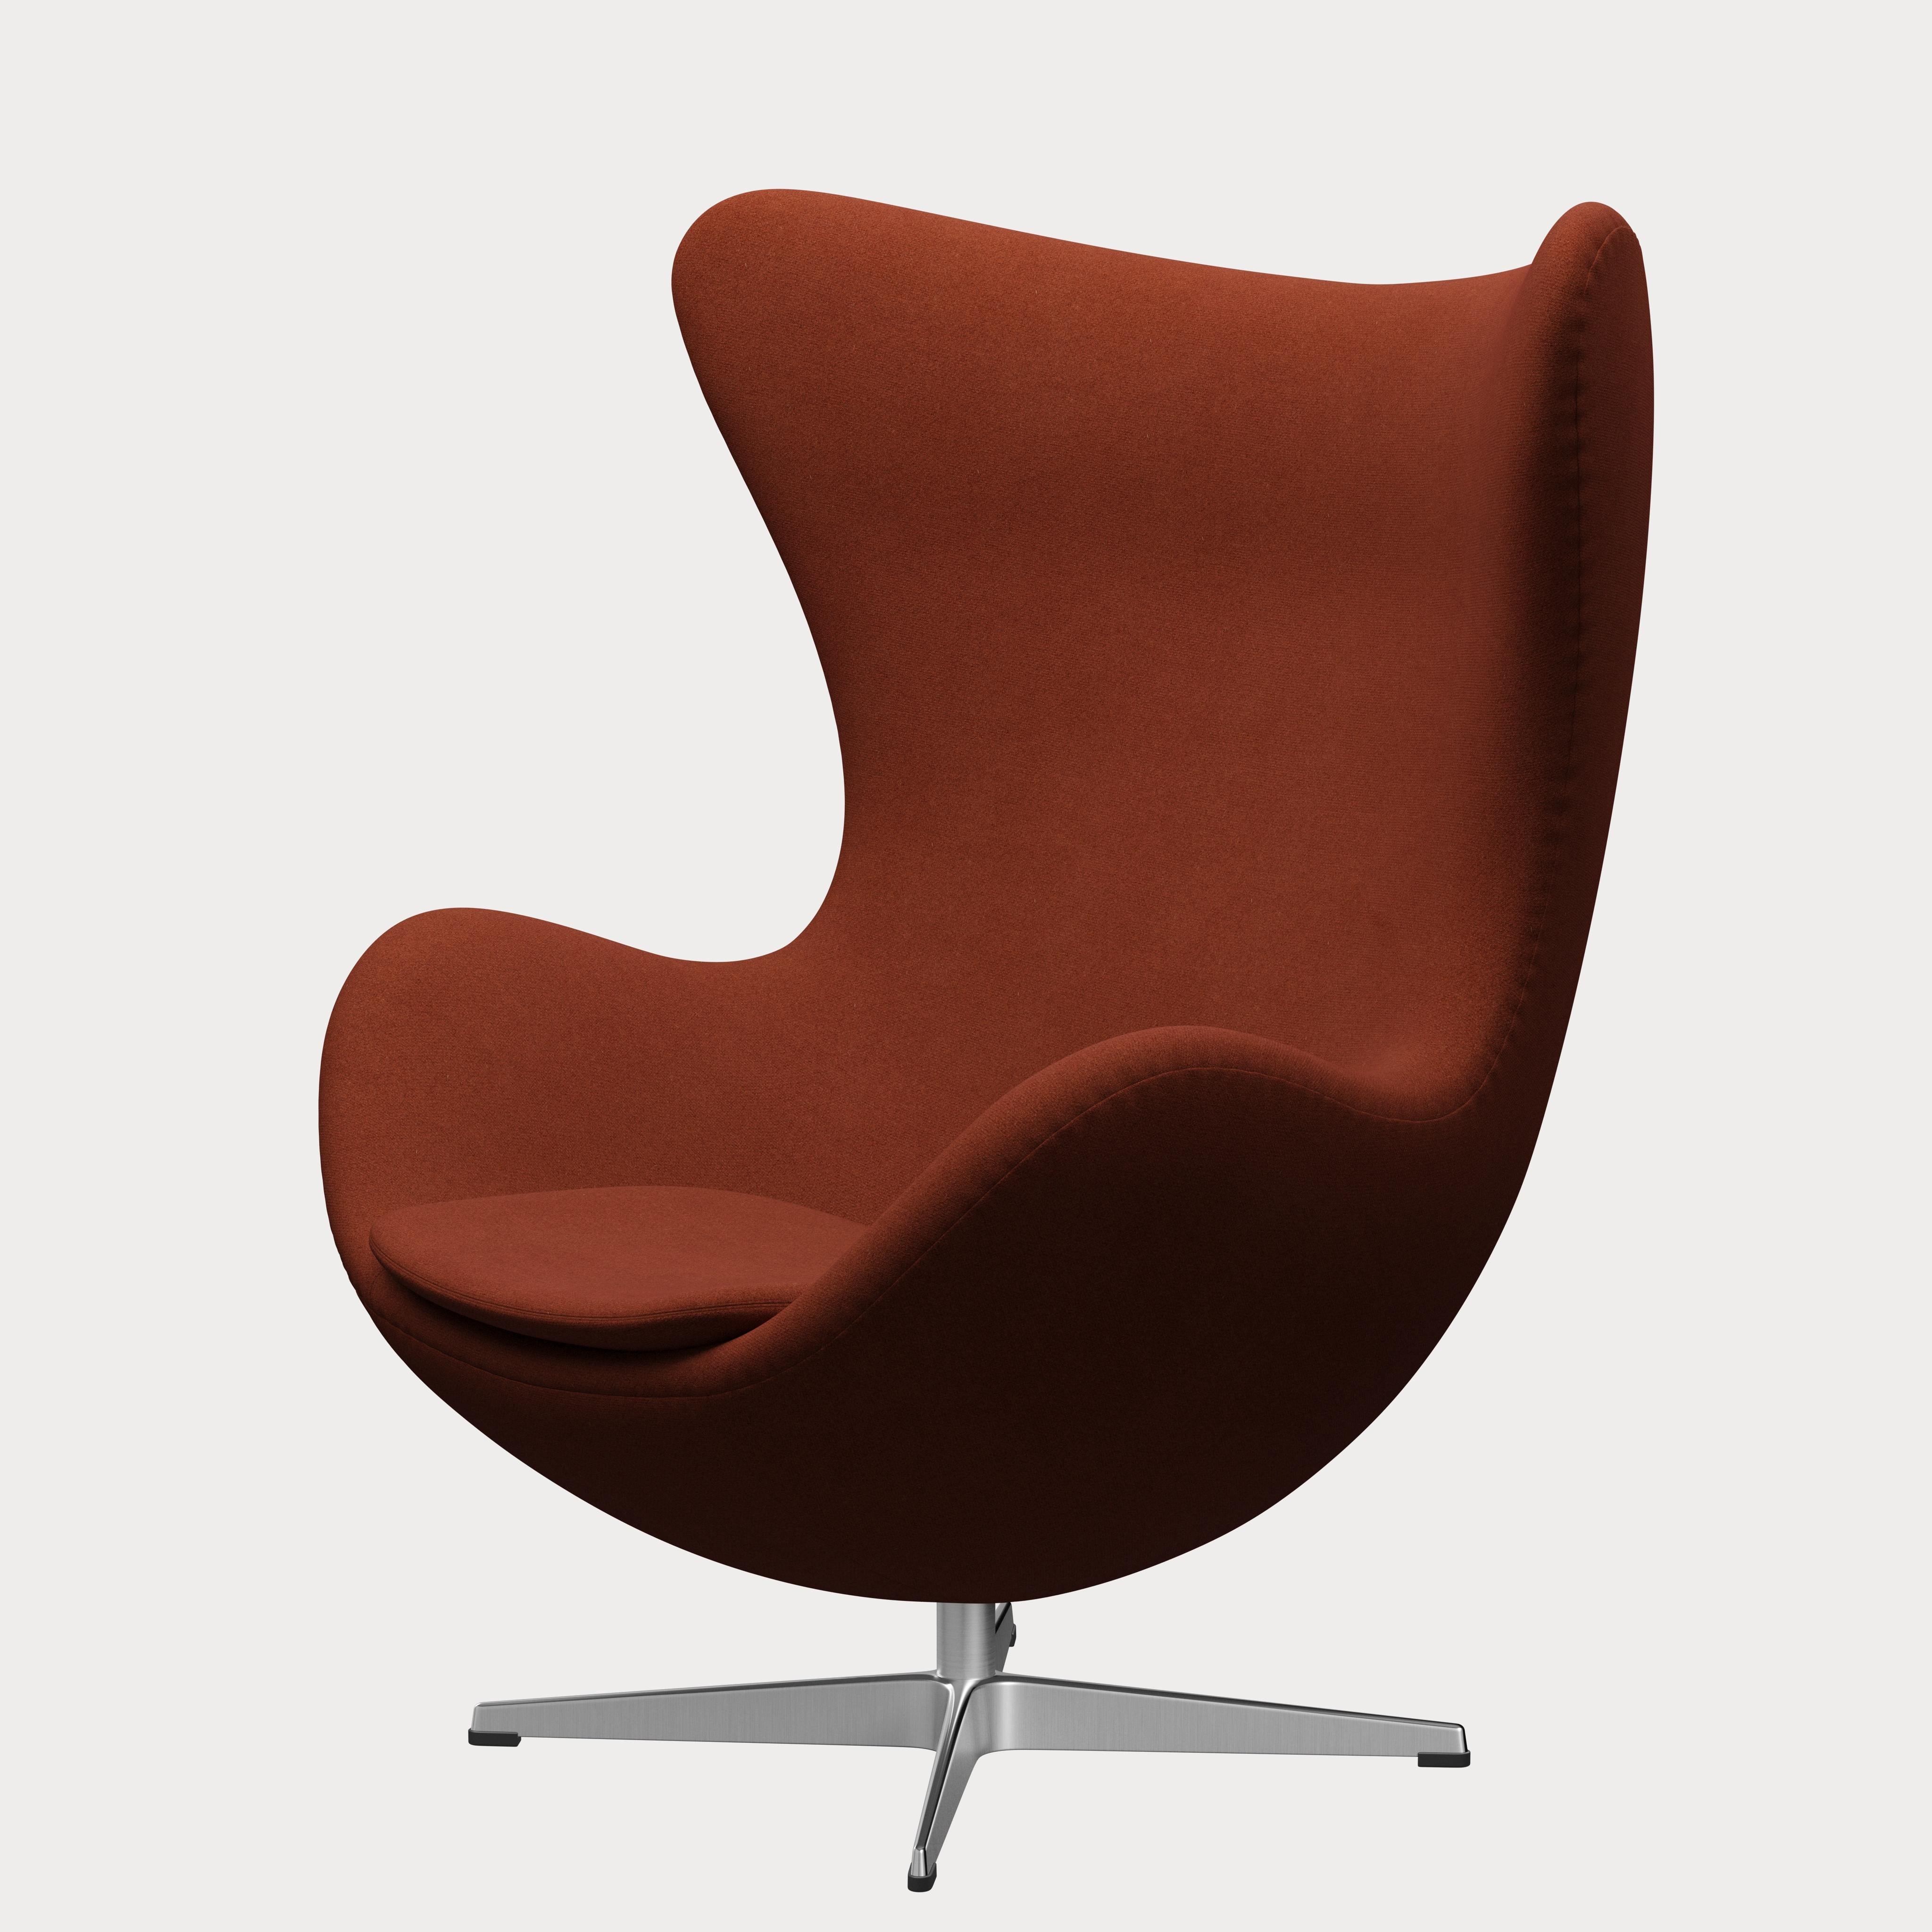 Contemporary Arne Jacobsen 'Egg' Chair for Fritz Hansen in Fabric Upholstery (Cat. 1) For Sale